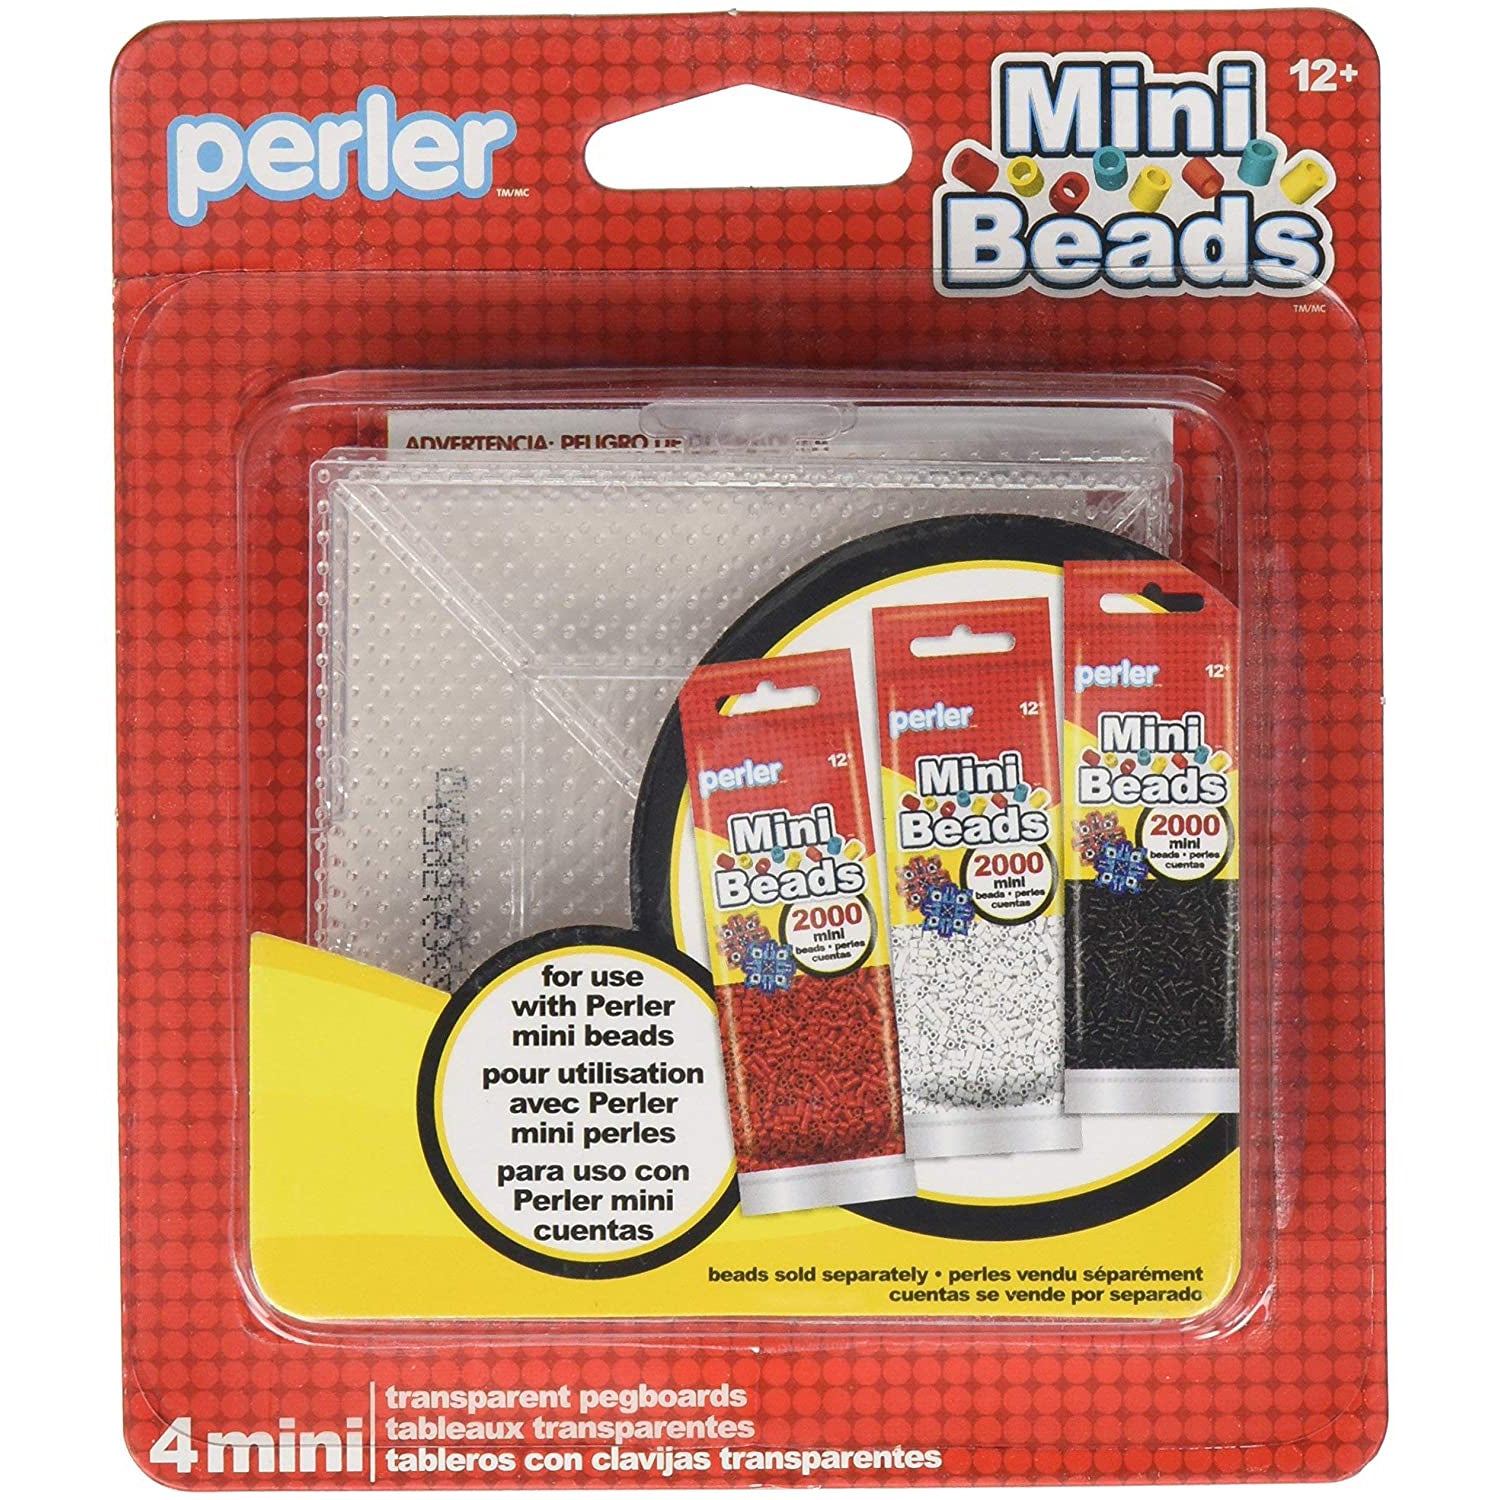 Perler - Standard 4 Pack Pegboards